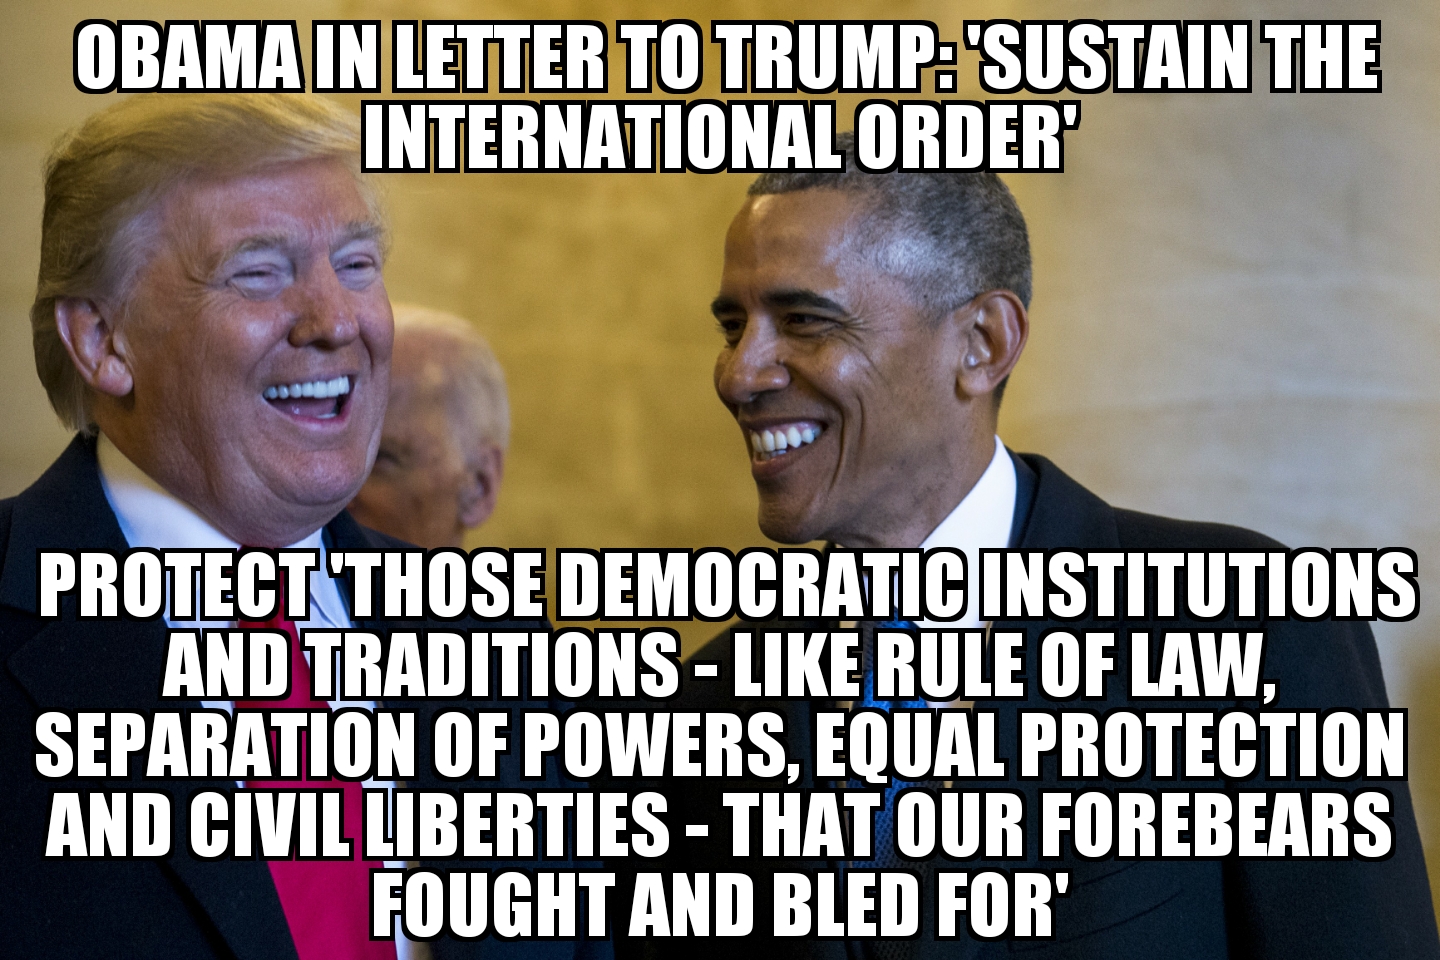 Obama letter to Trump published